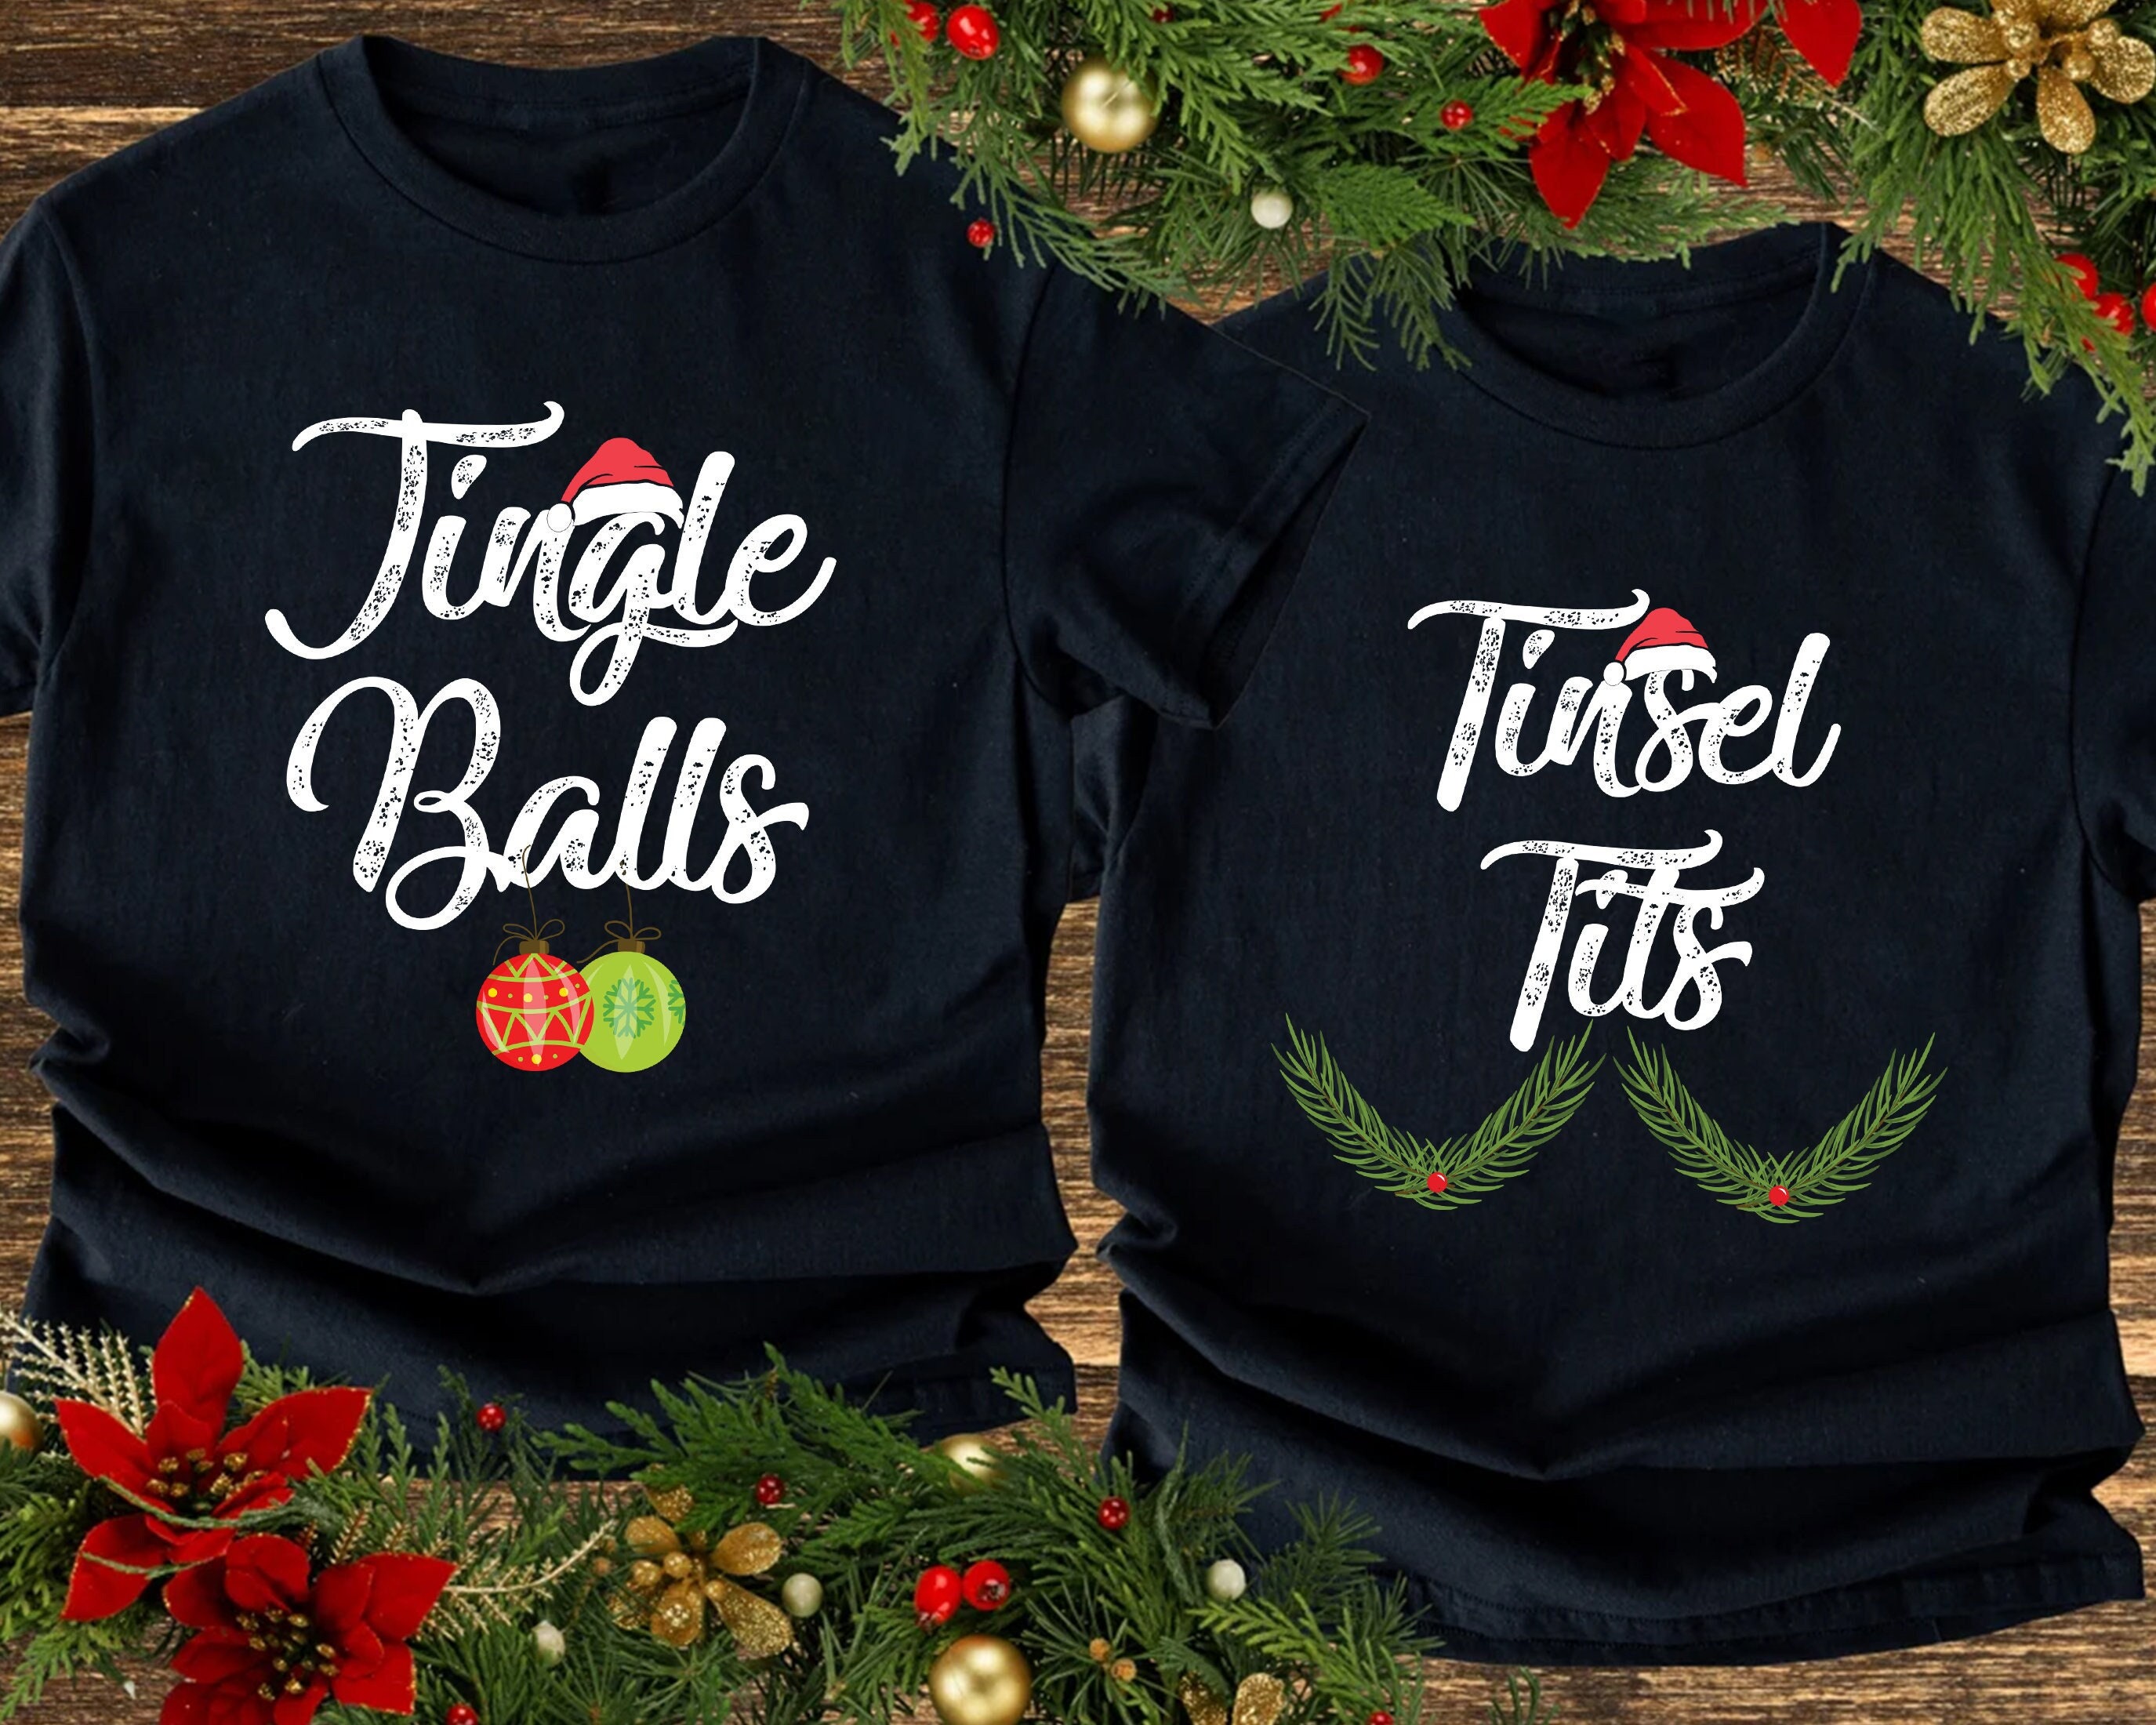 Discover Jingle Balls Shirt, His And Hers Christmas Shirts, Tinsel Tits shirt